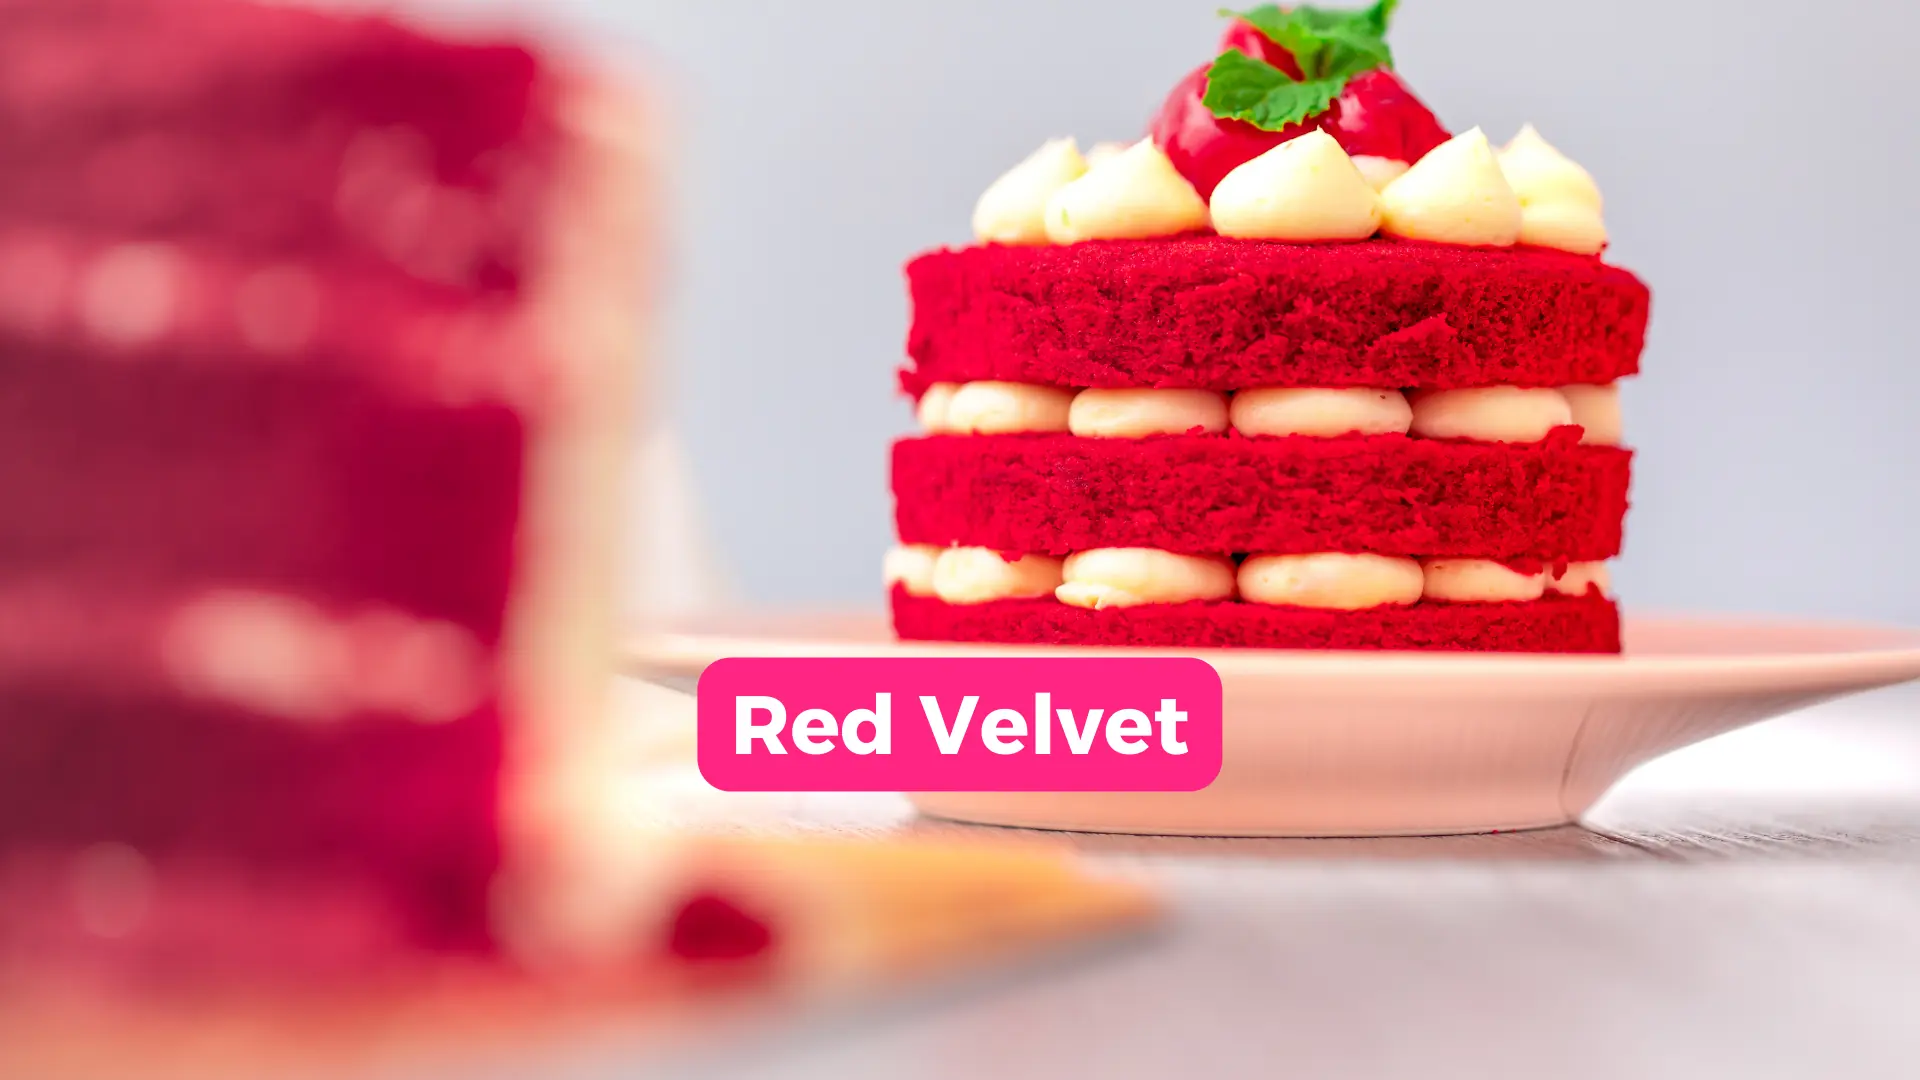 Bolo de pote Red Velvet: Receita, Como Fazer e Ingredientes